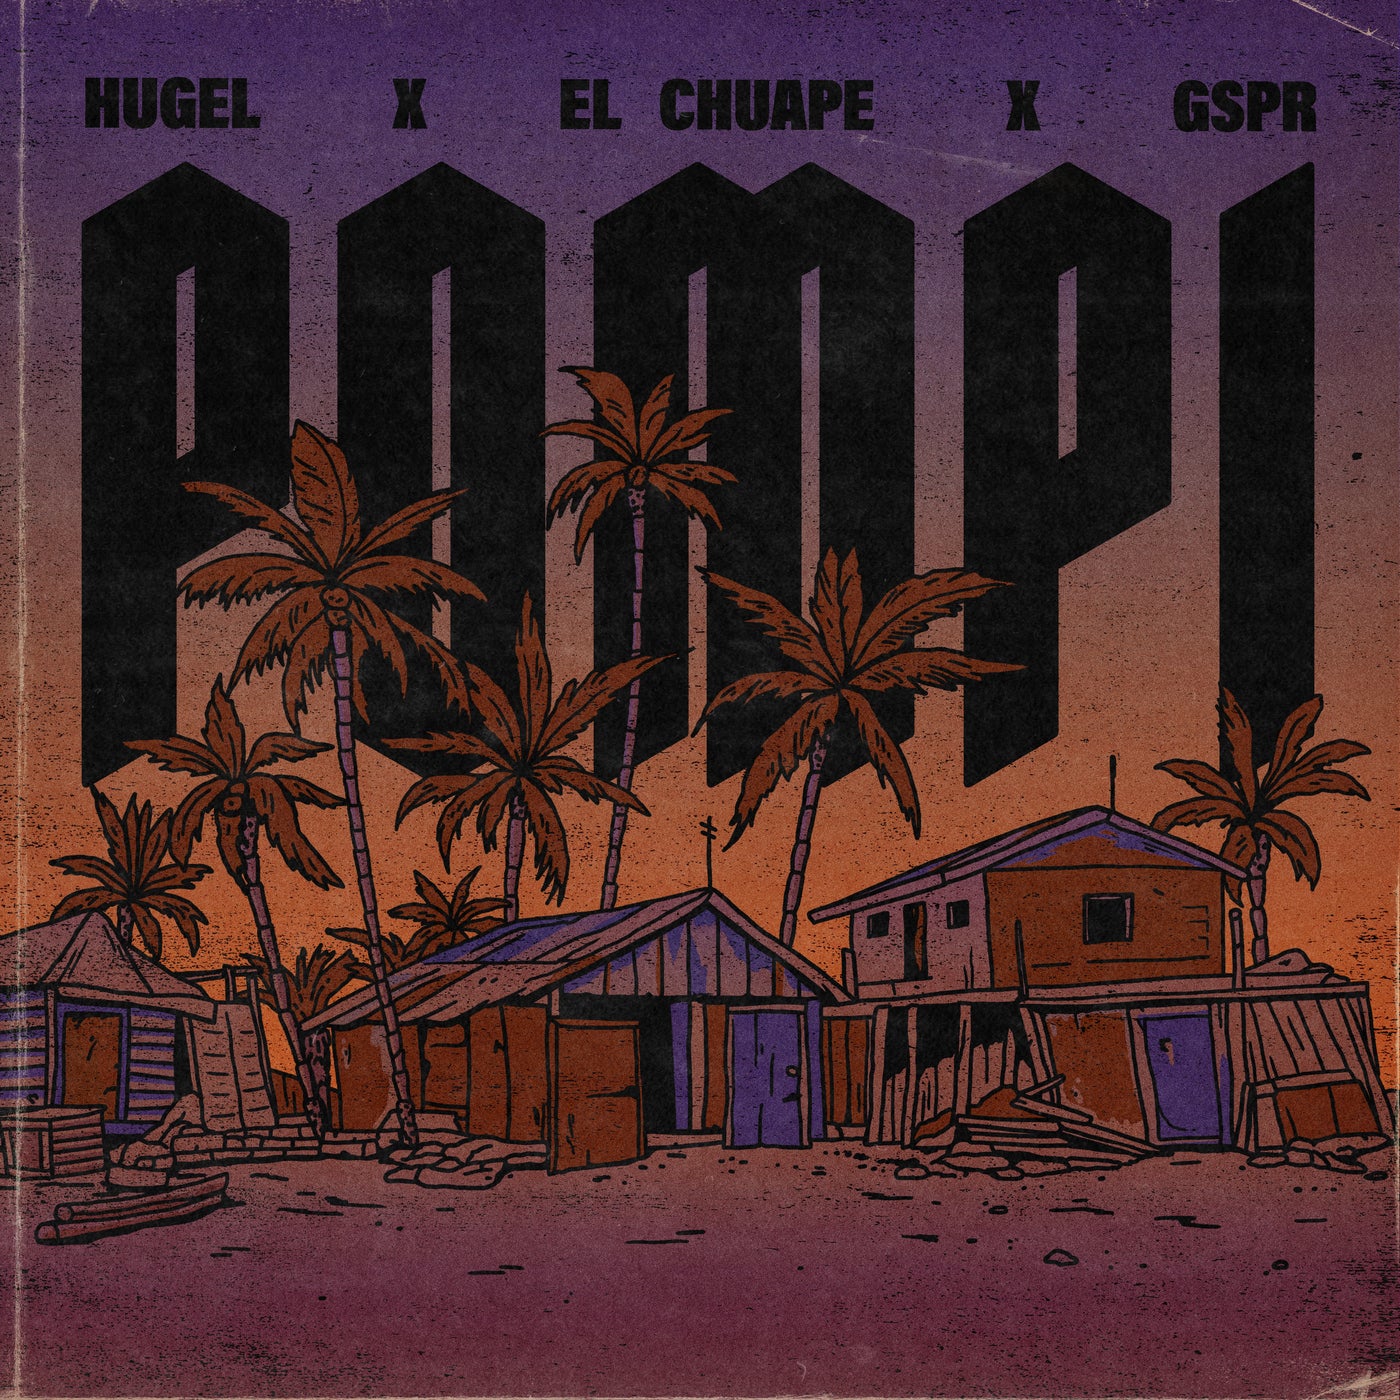 image cover: El Chuape, Hugel, GSPR - Pompi (Extended Mix) on SPINNIN' RECORDS